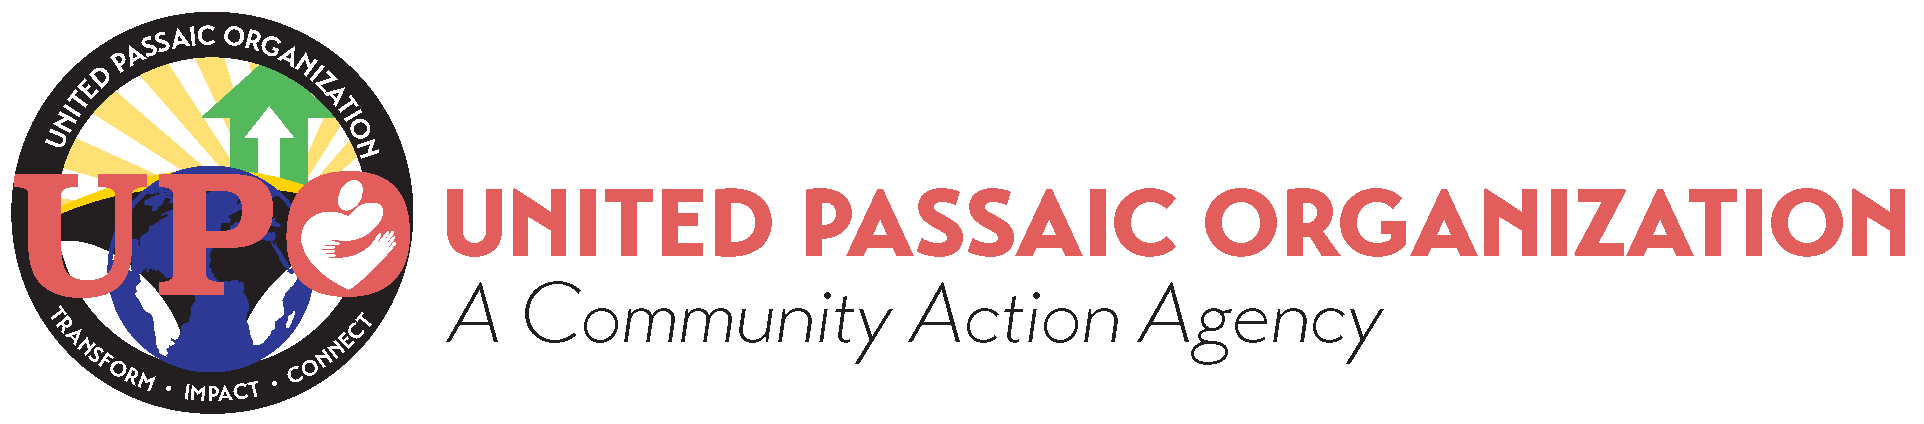 United Passaic Organization Inc., A Community Action Agency logo